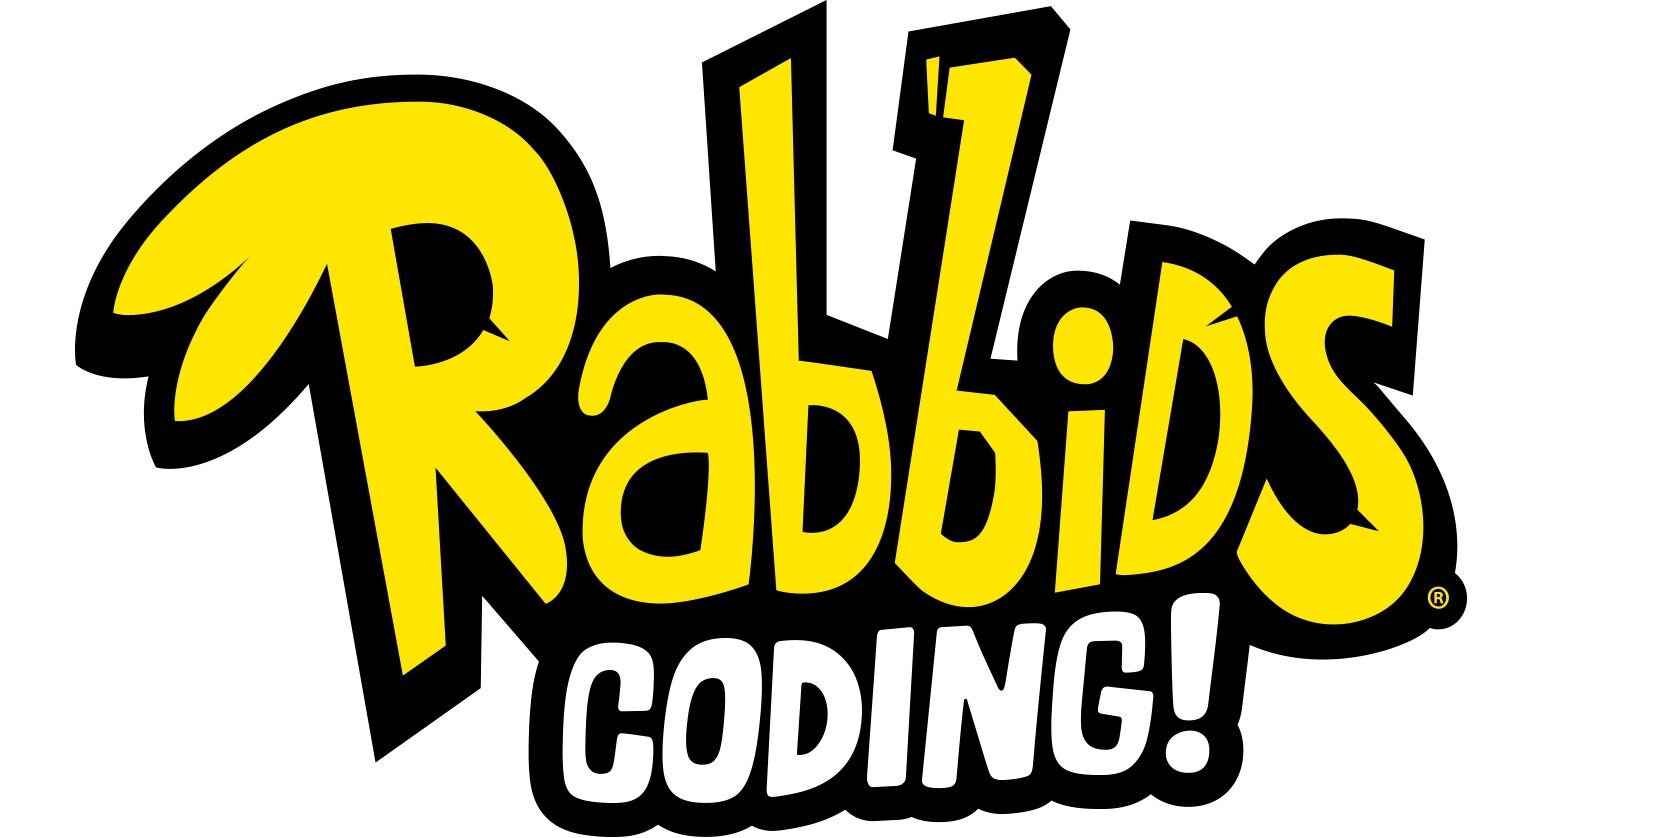 Rabbids Coding! – Apps no Google Play